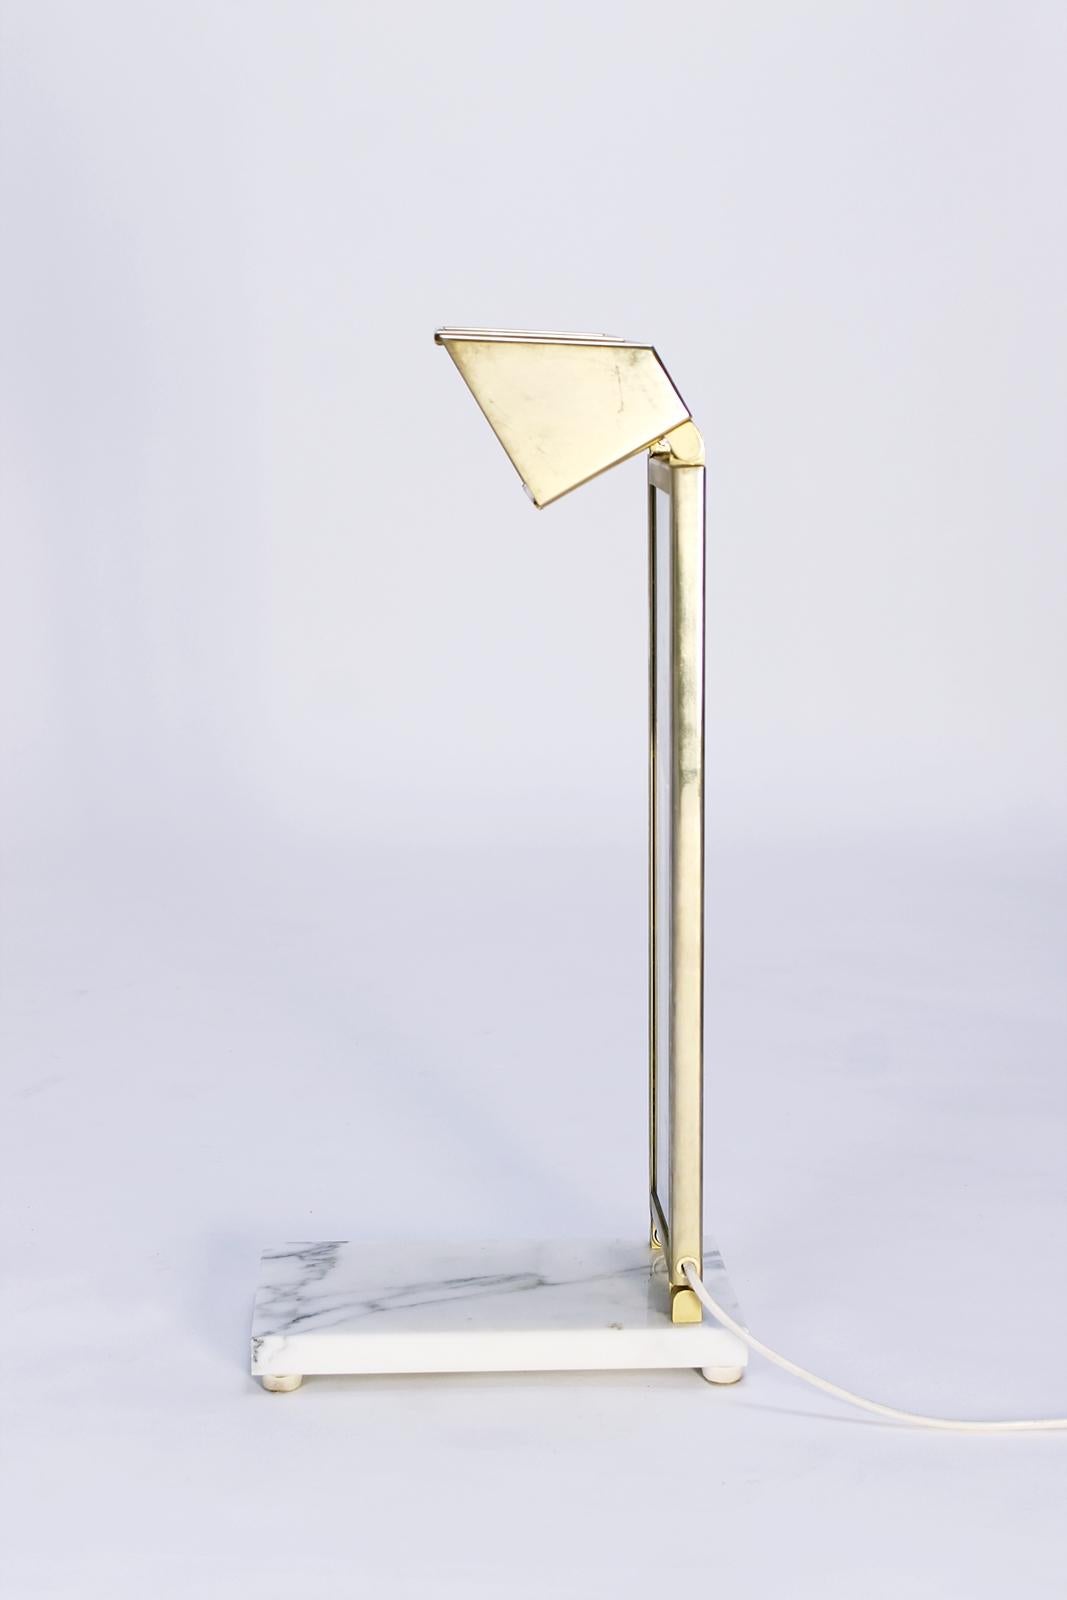 American Pair of Custom Design Table Lamps in Manner of Charles Rennie Mackintosh